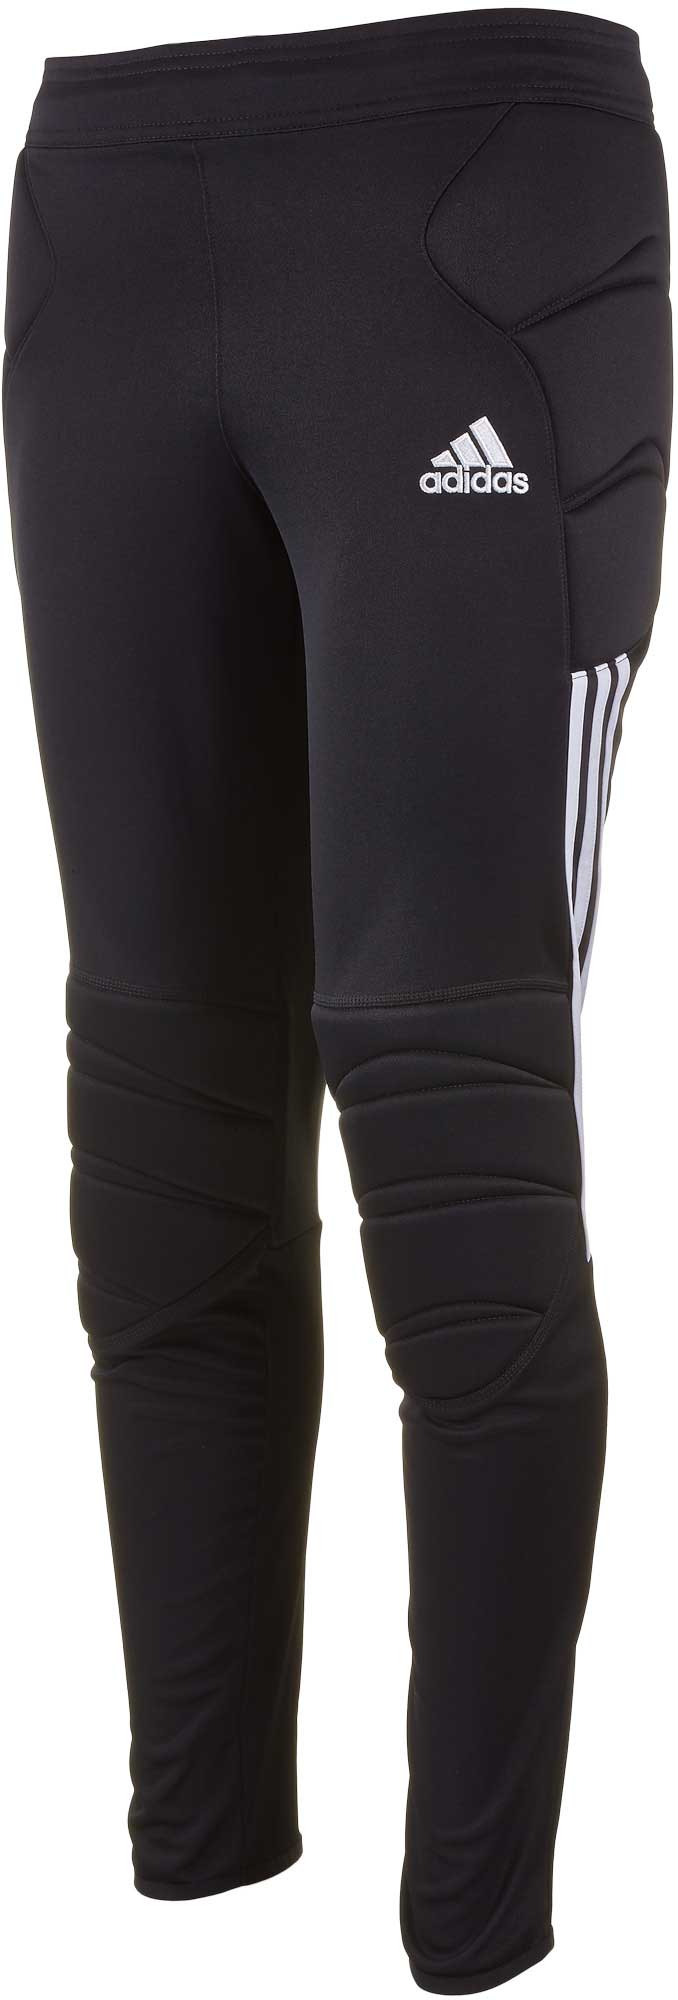 PRECISION 3/4 LENGTH GK PANTS JUNIOR - Goal Keeper - Football - Printed  Team Sportswear | PSM Sportswear